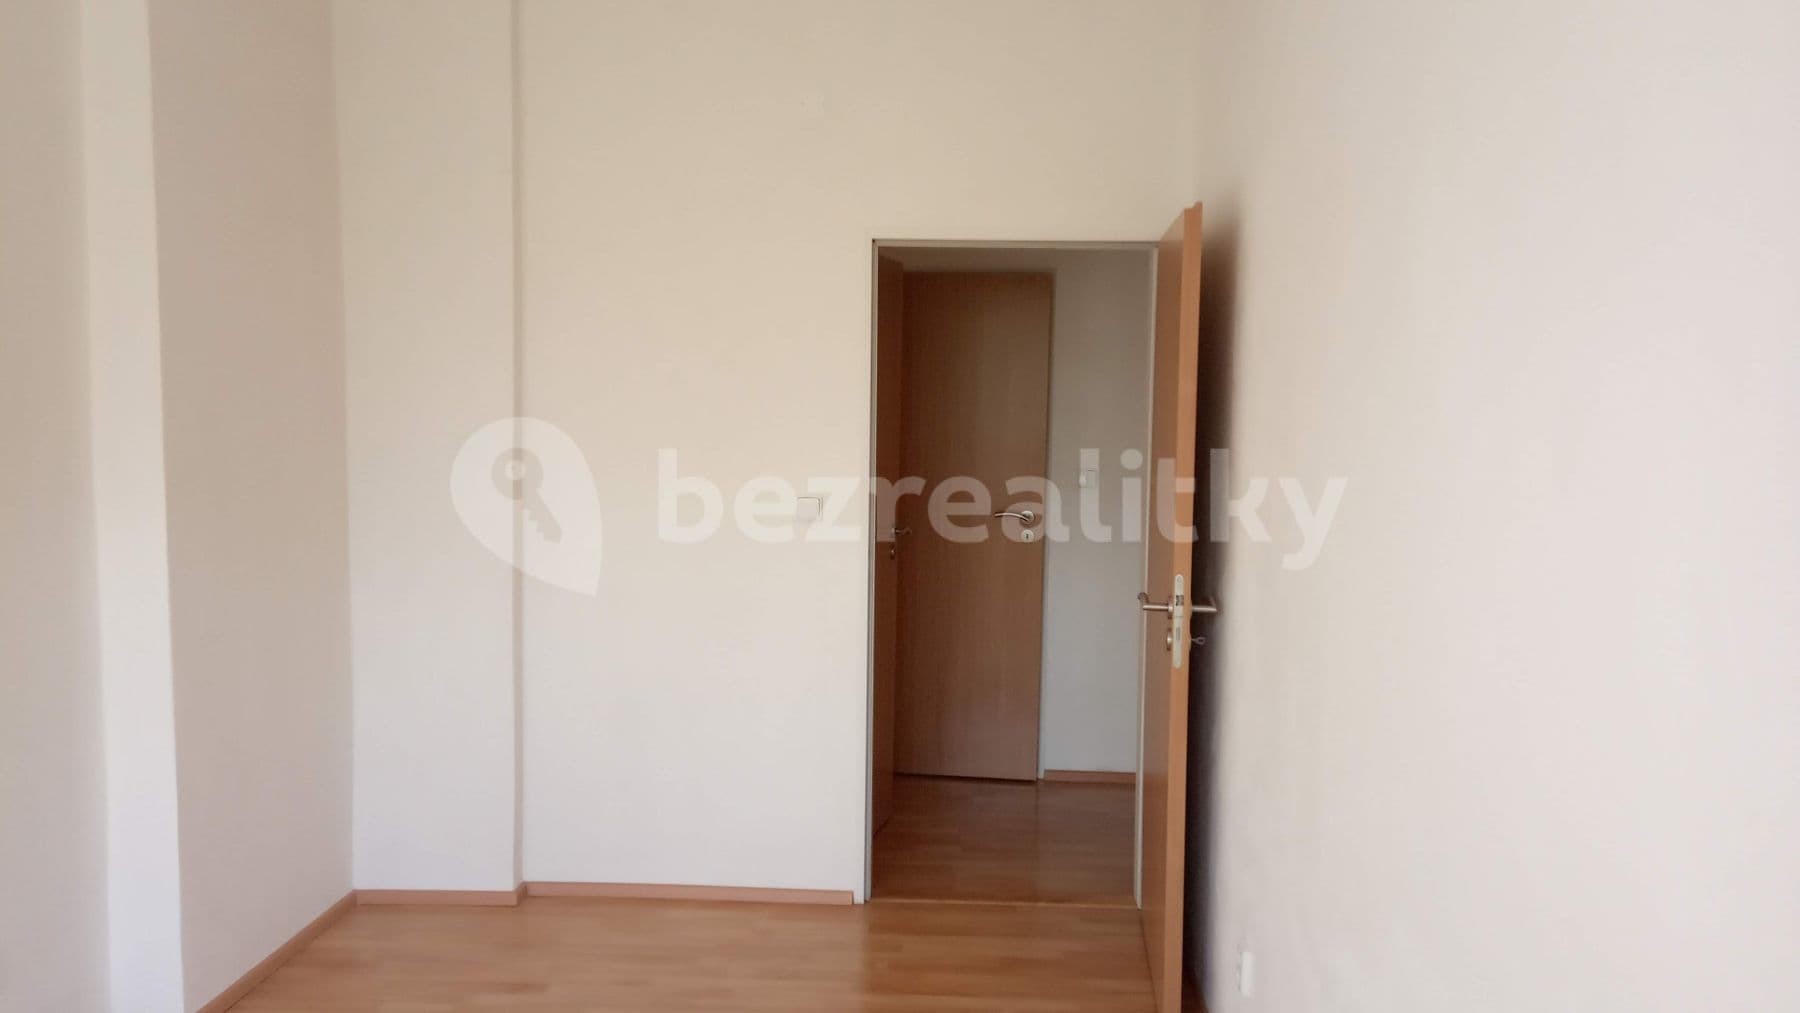 1 bedroom with open-plan kitchen flat to rent, 40 m², Pastrnkova, Brno, Jihomoravský Region